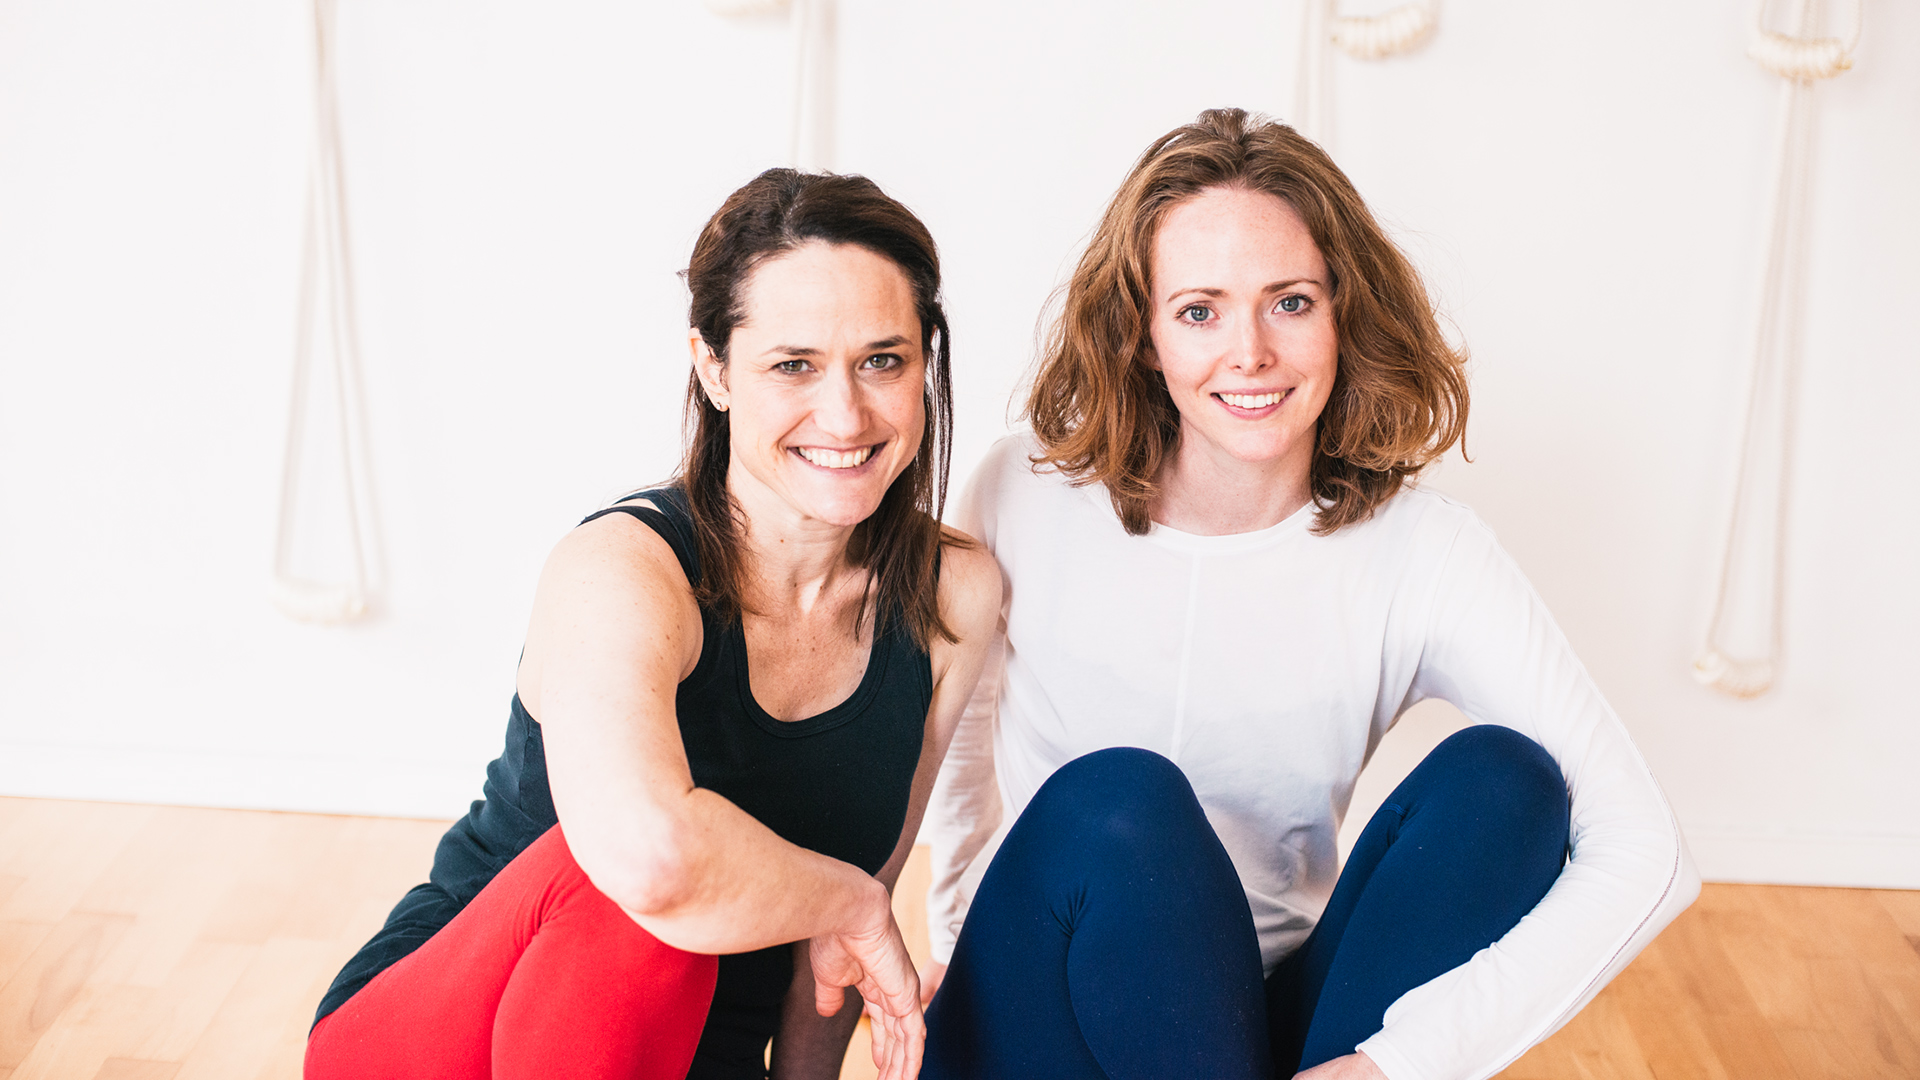 Foodadit founder, Alanna Lawley interviews Elizabeth Smullens Brass - Iyengar Yoga Teacher, Berlin, Germany